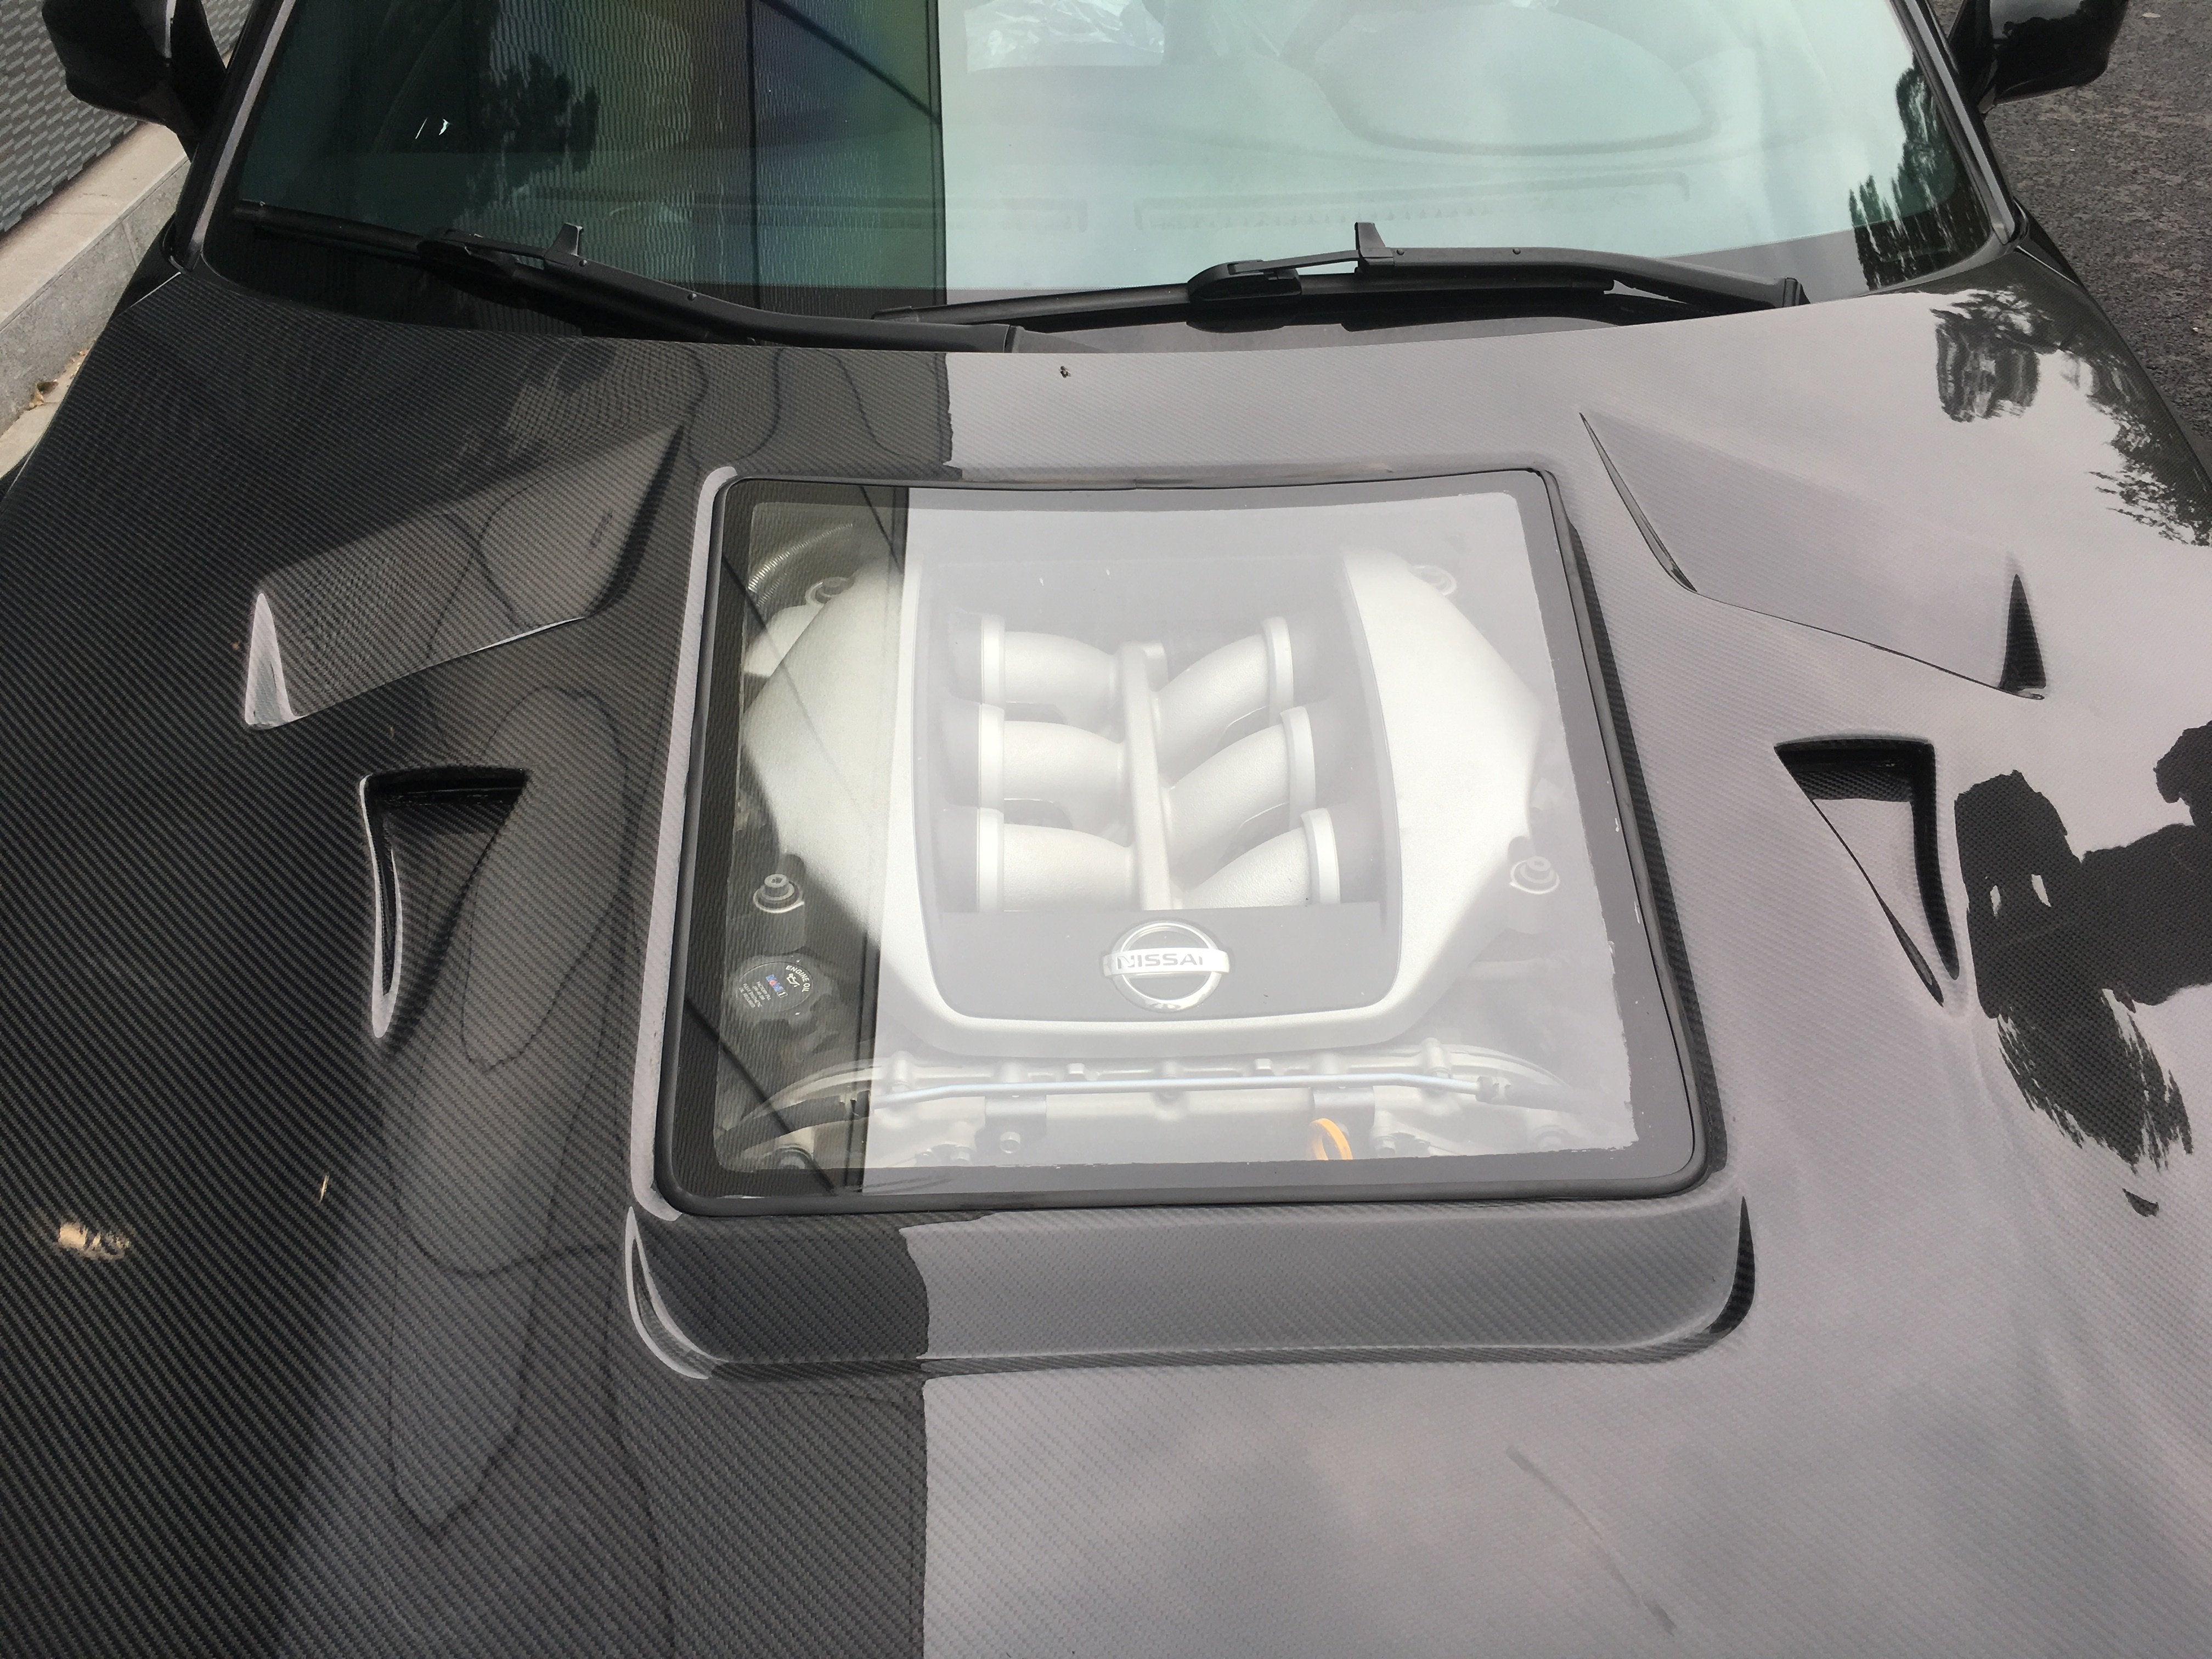 CMST Tuning Nissan GTR GT-R R35 2008-2016 Carbon Fiber Tempered Glass Transparent Hood Window See Through